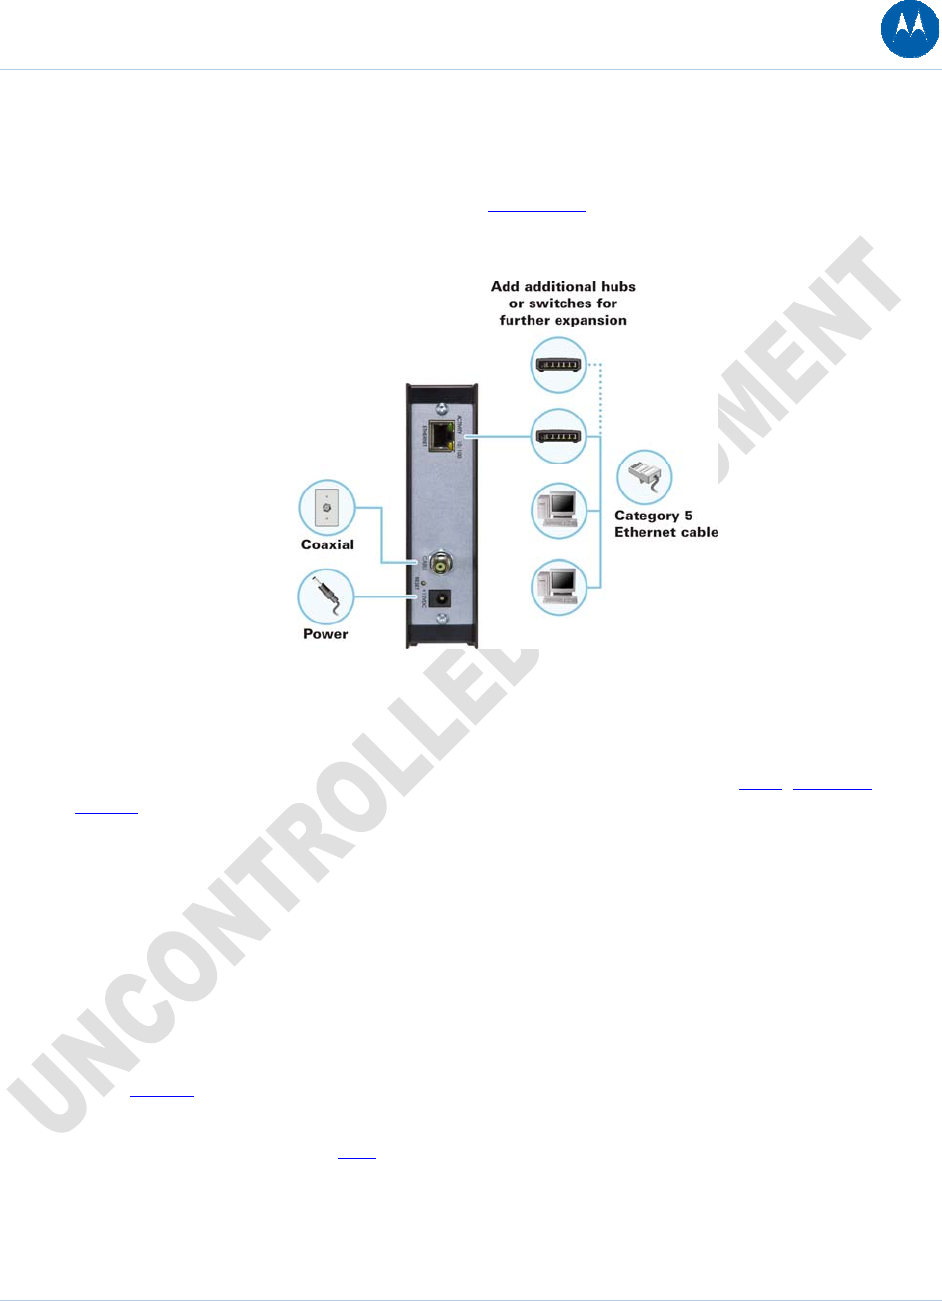 ARRIS SBG901 Wireless Cable Modem Gateway User Manual